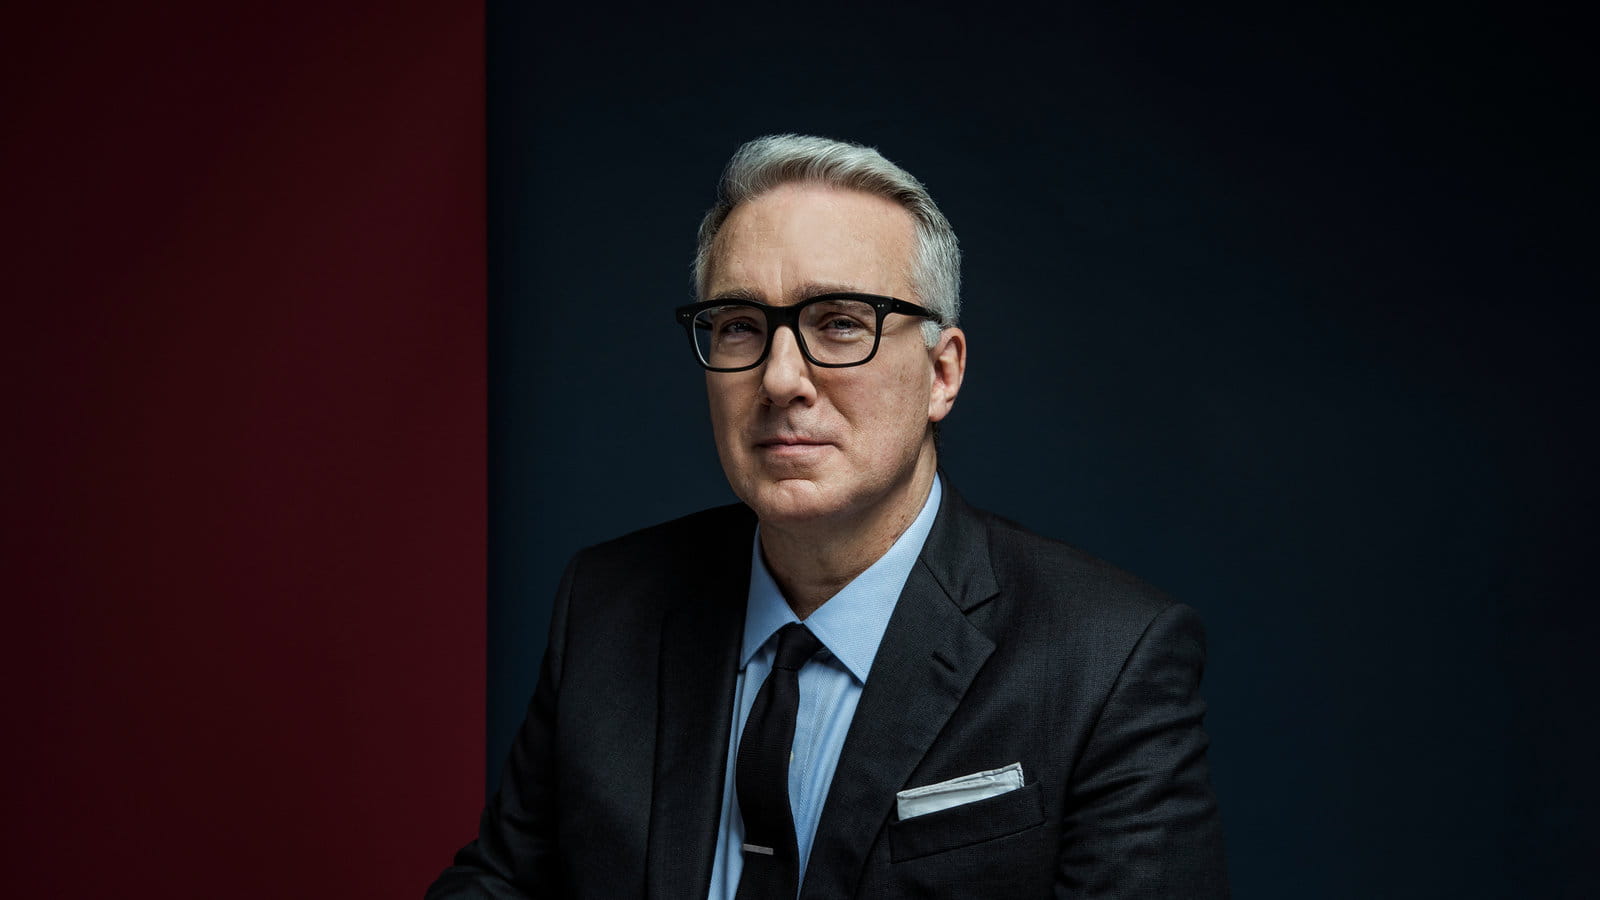 Image of Keith Olbermann